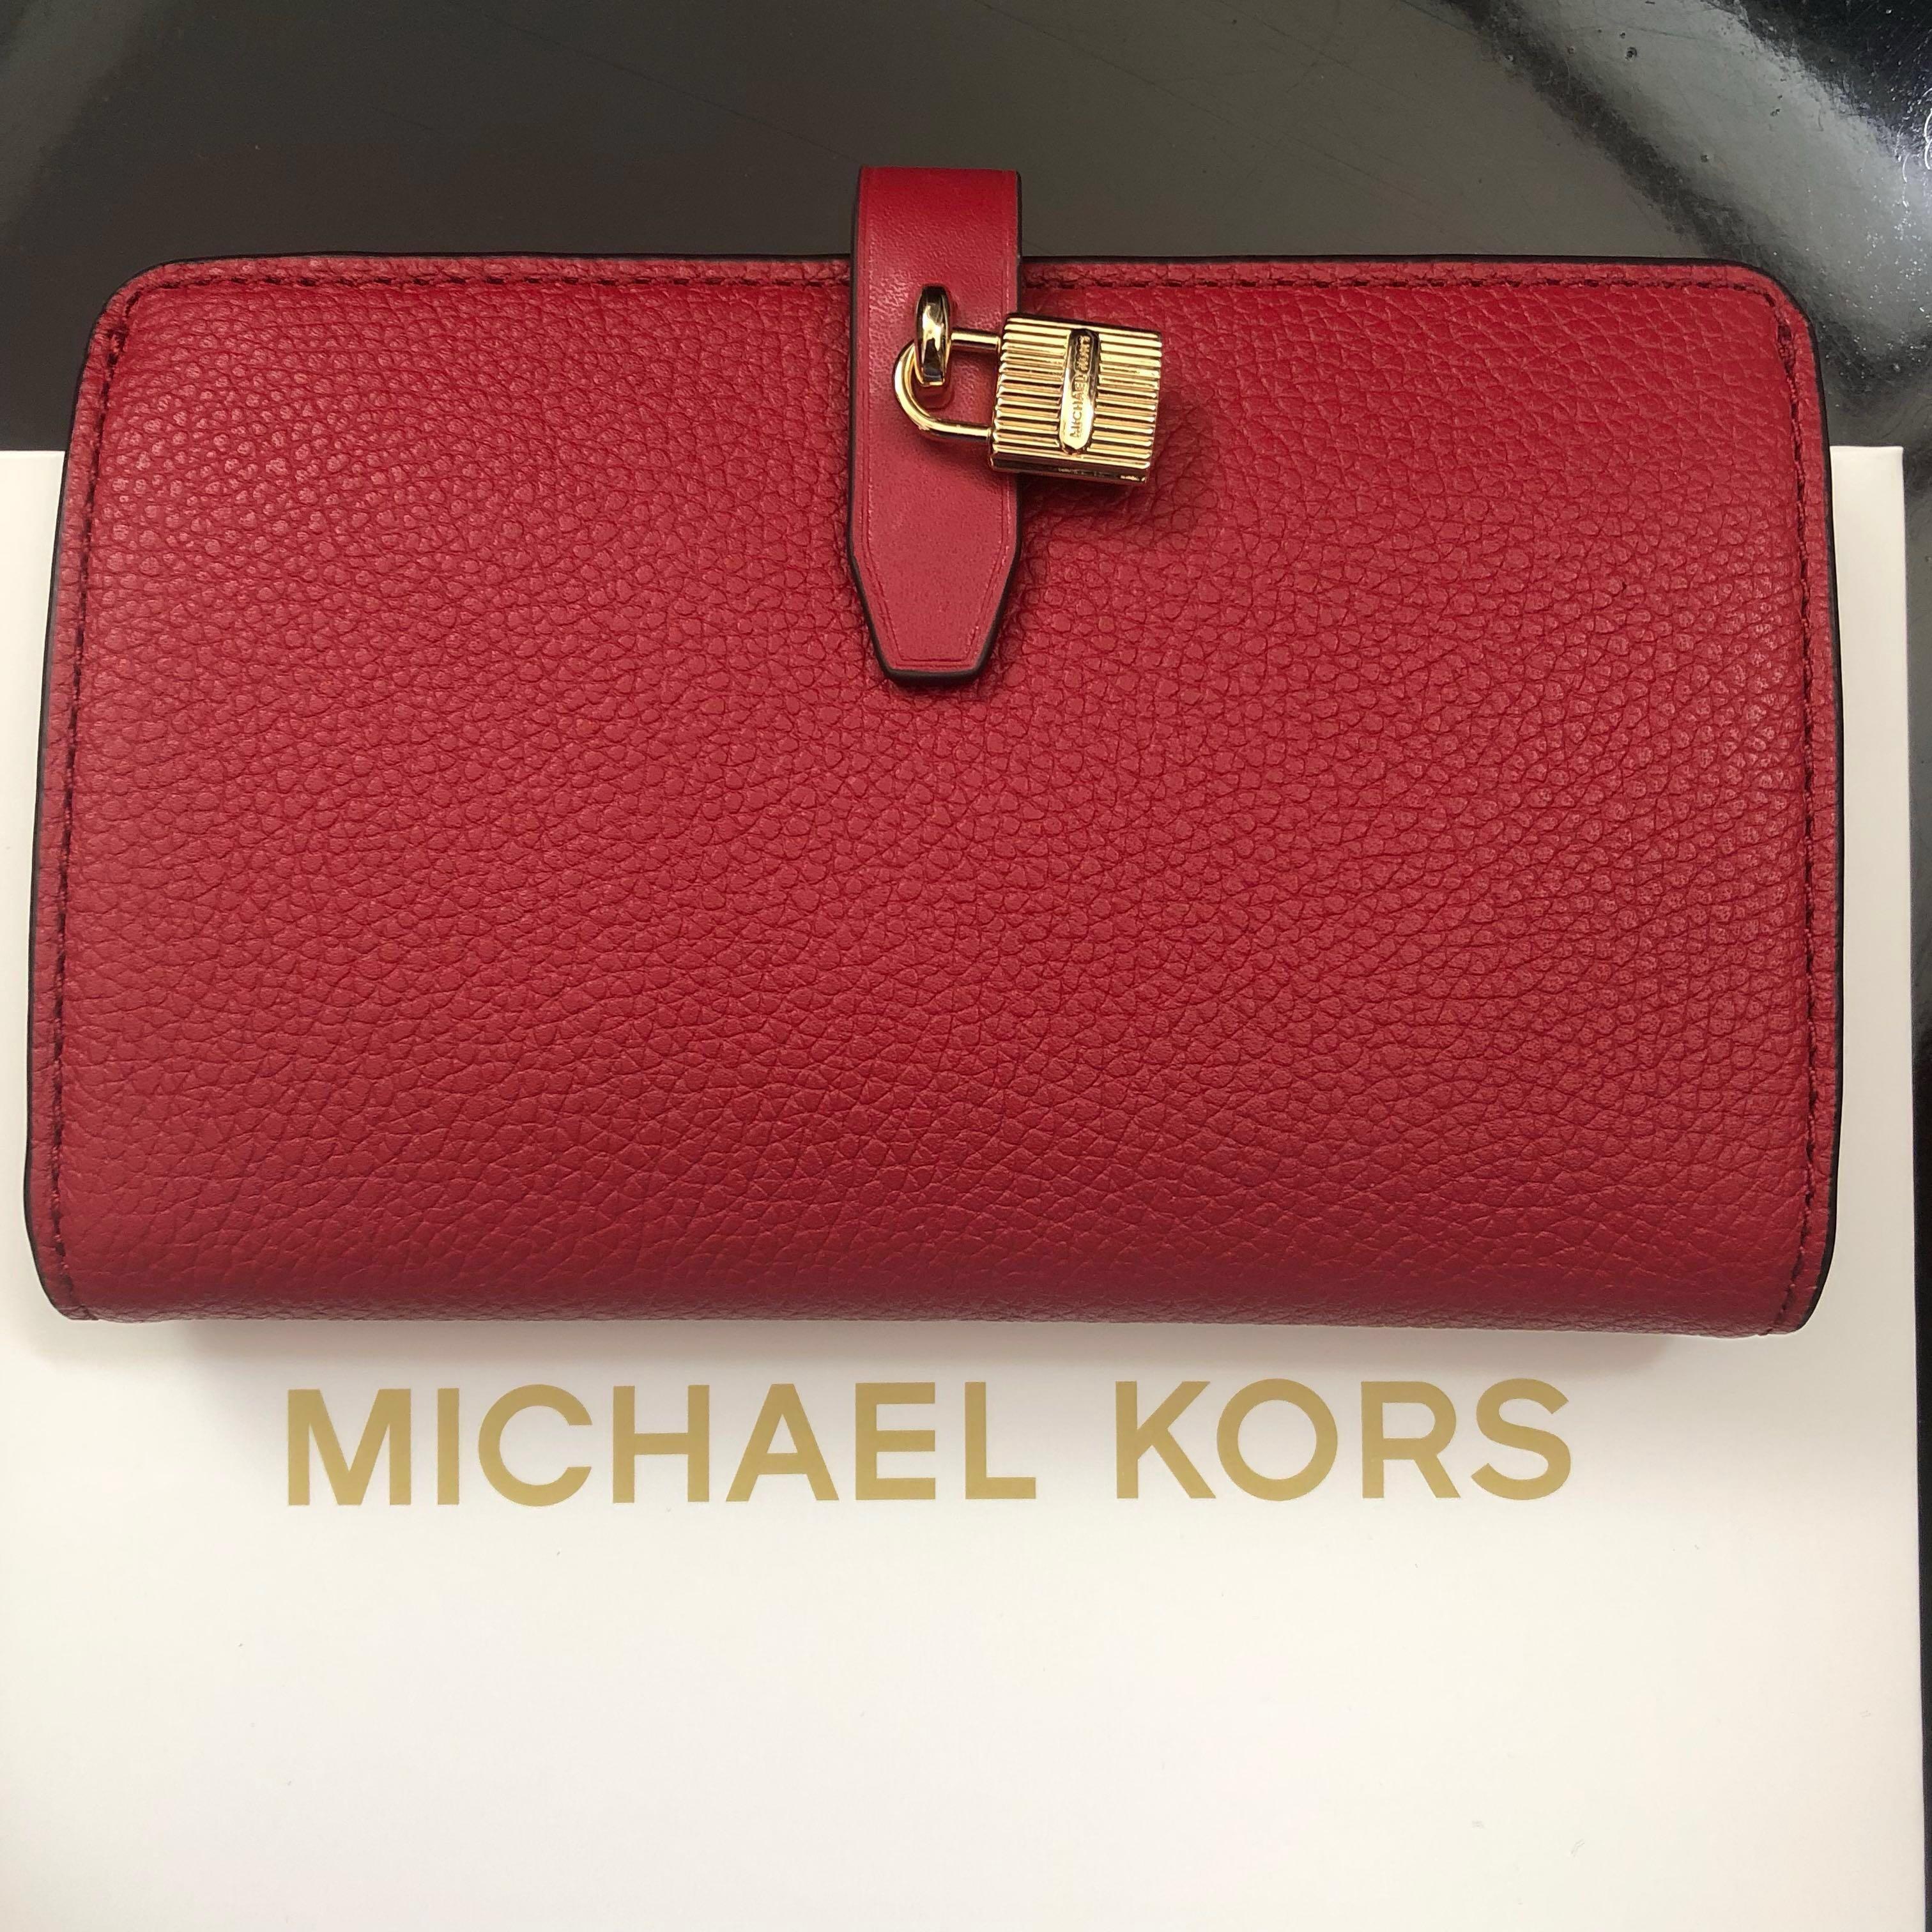 michael kors wallet with lock